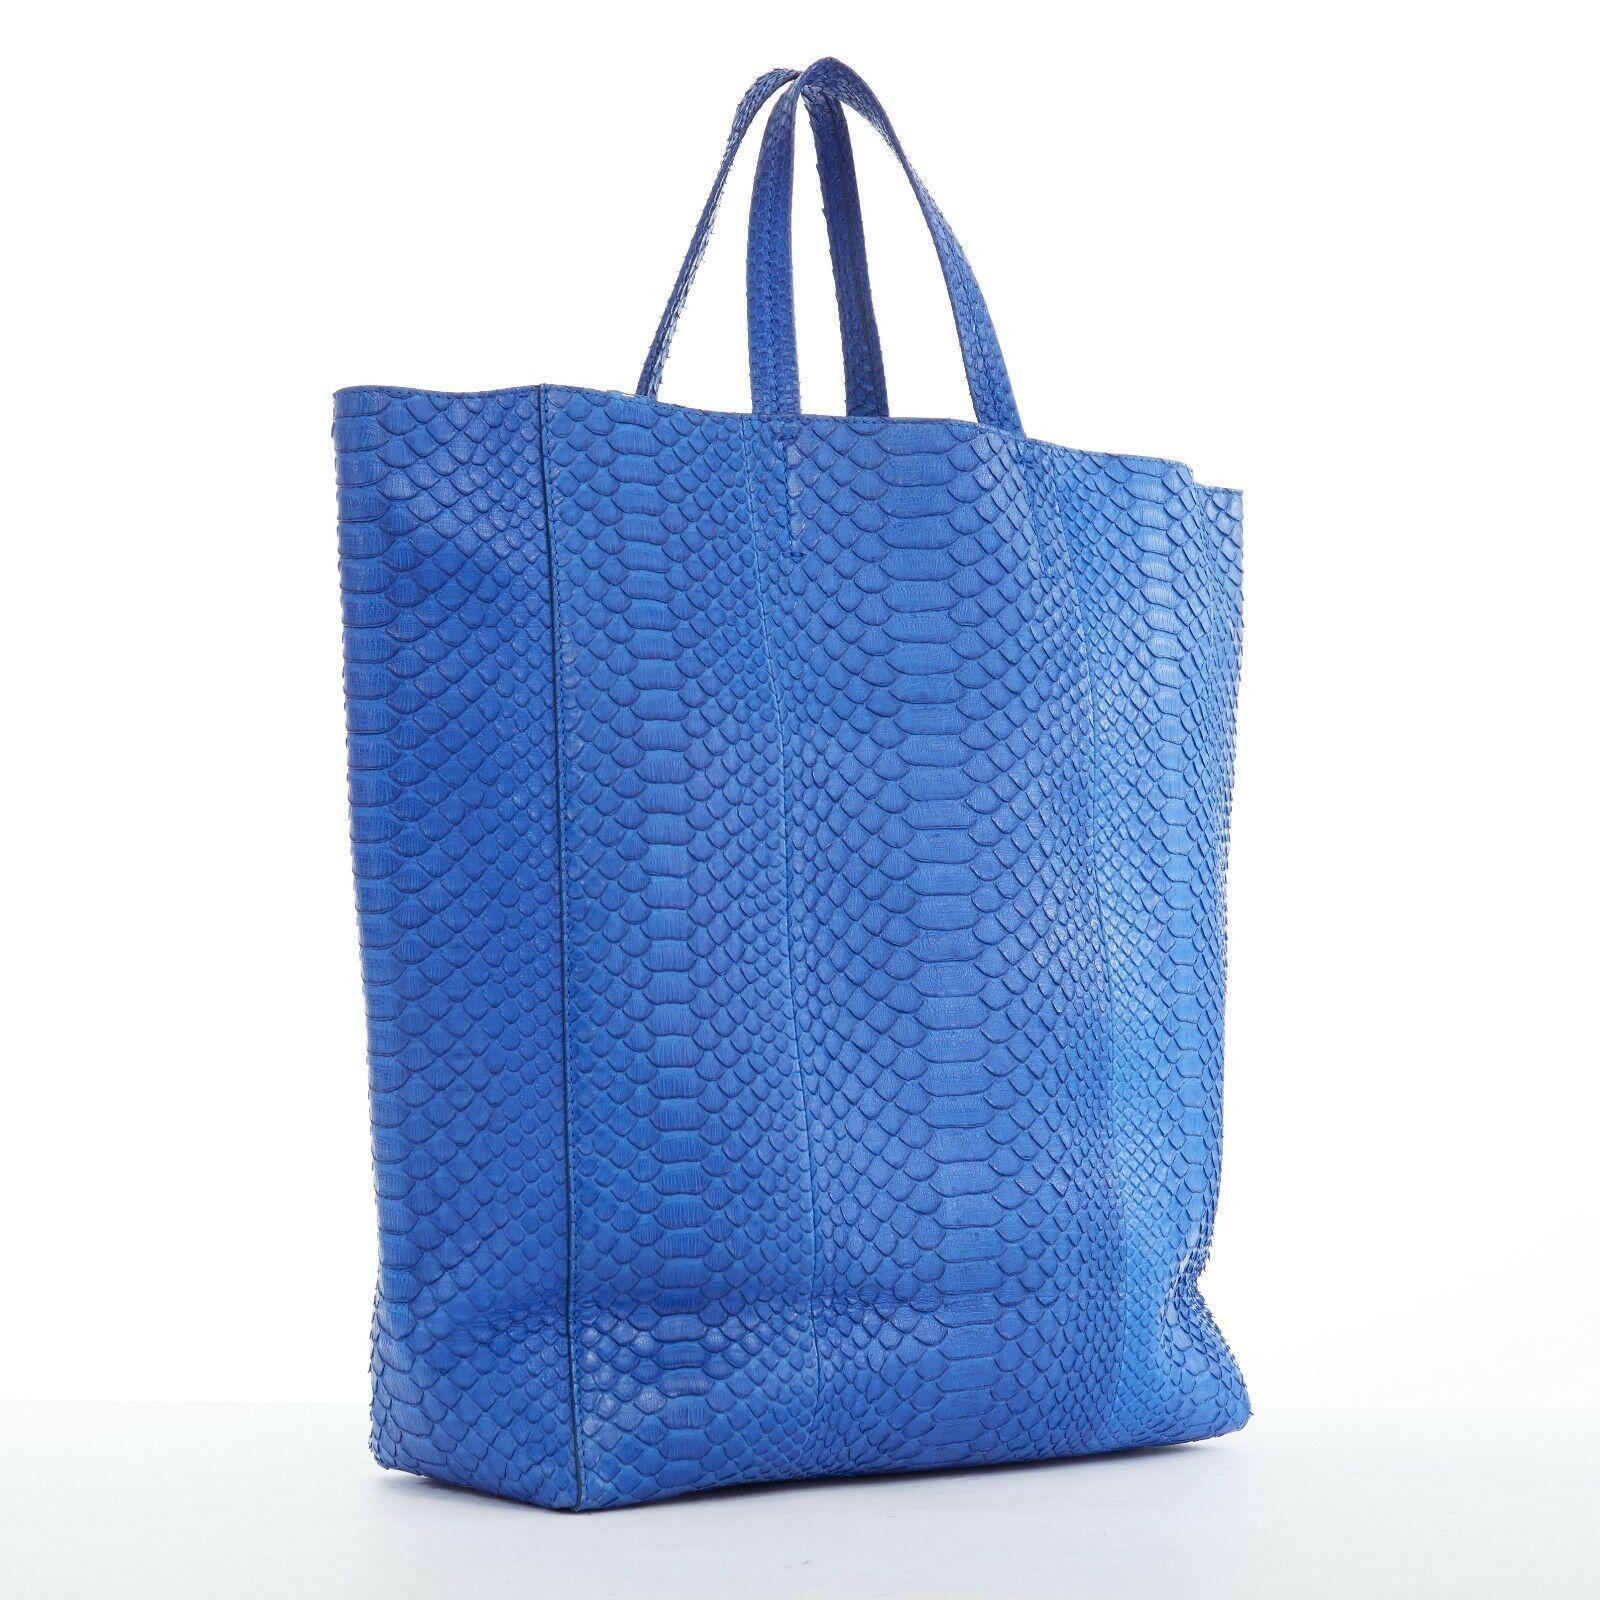 Blue CELINE PHOEBE PHILO Cabas cobalt blue python leather verticle tote shopper bag